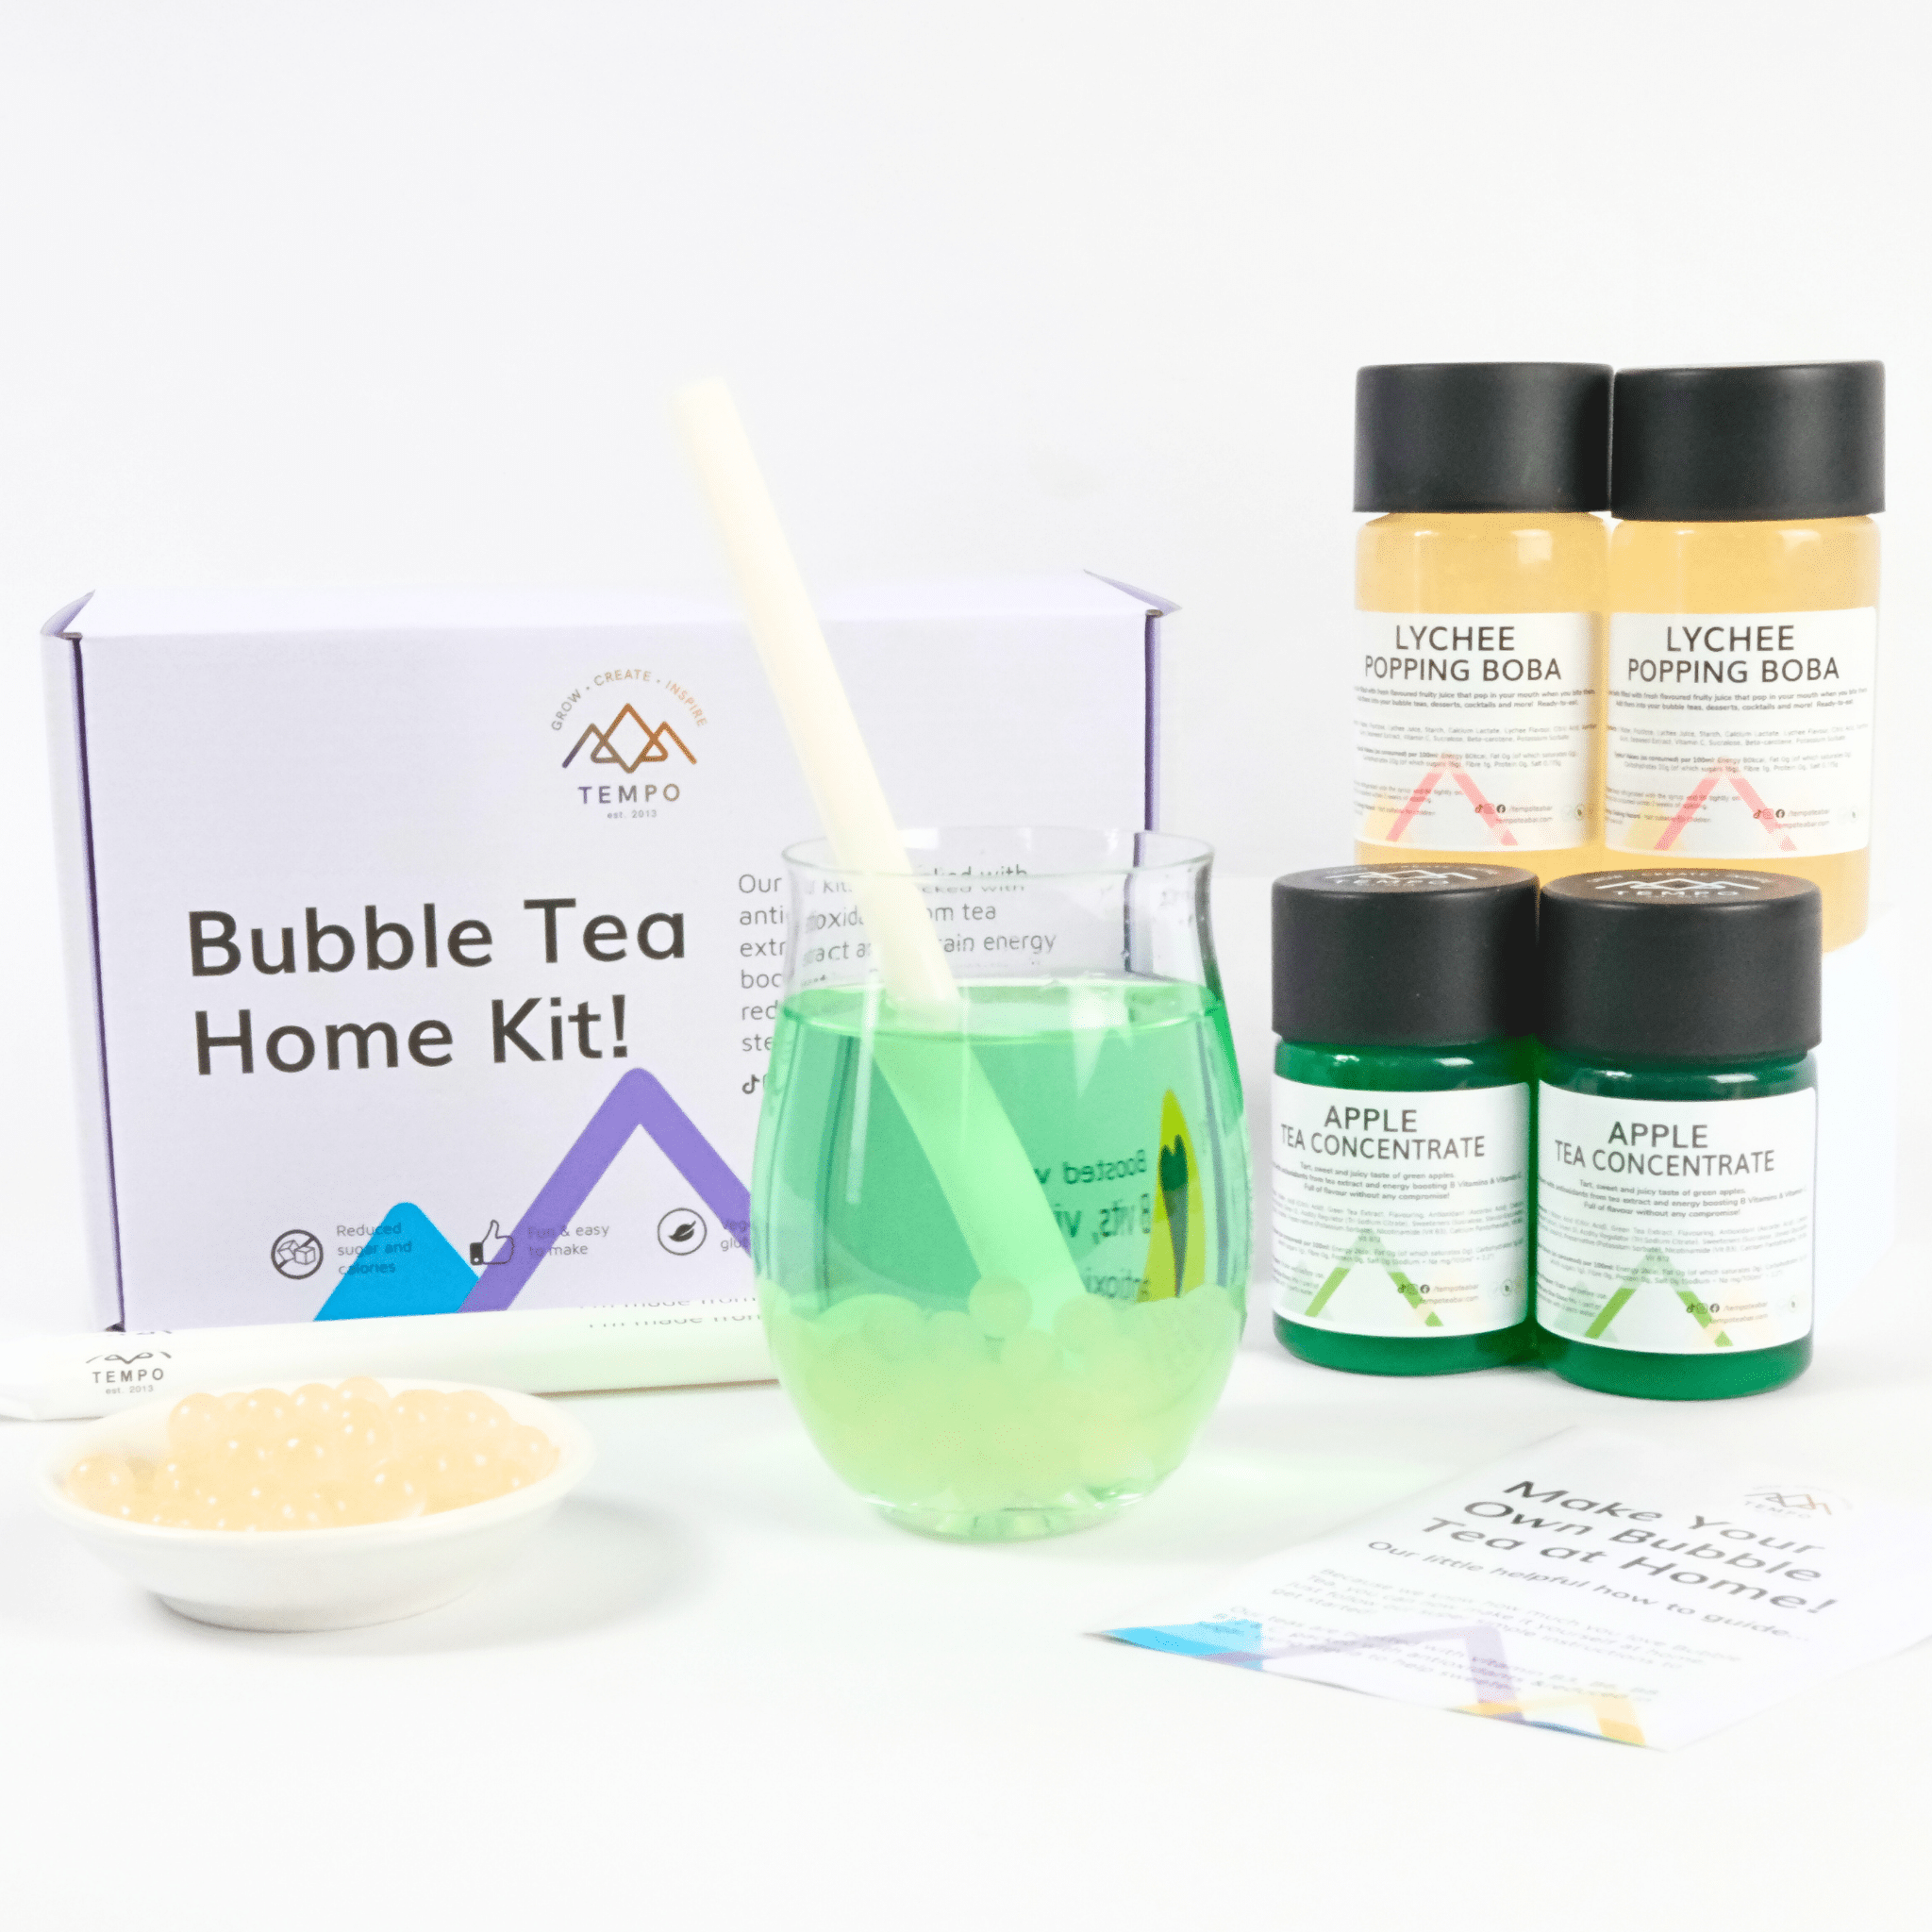 Tempo Tea Bar Mixed Fruit Bubble Tea Subscription Box | Serves 6